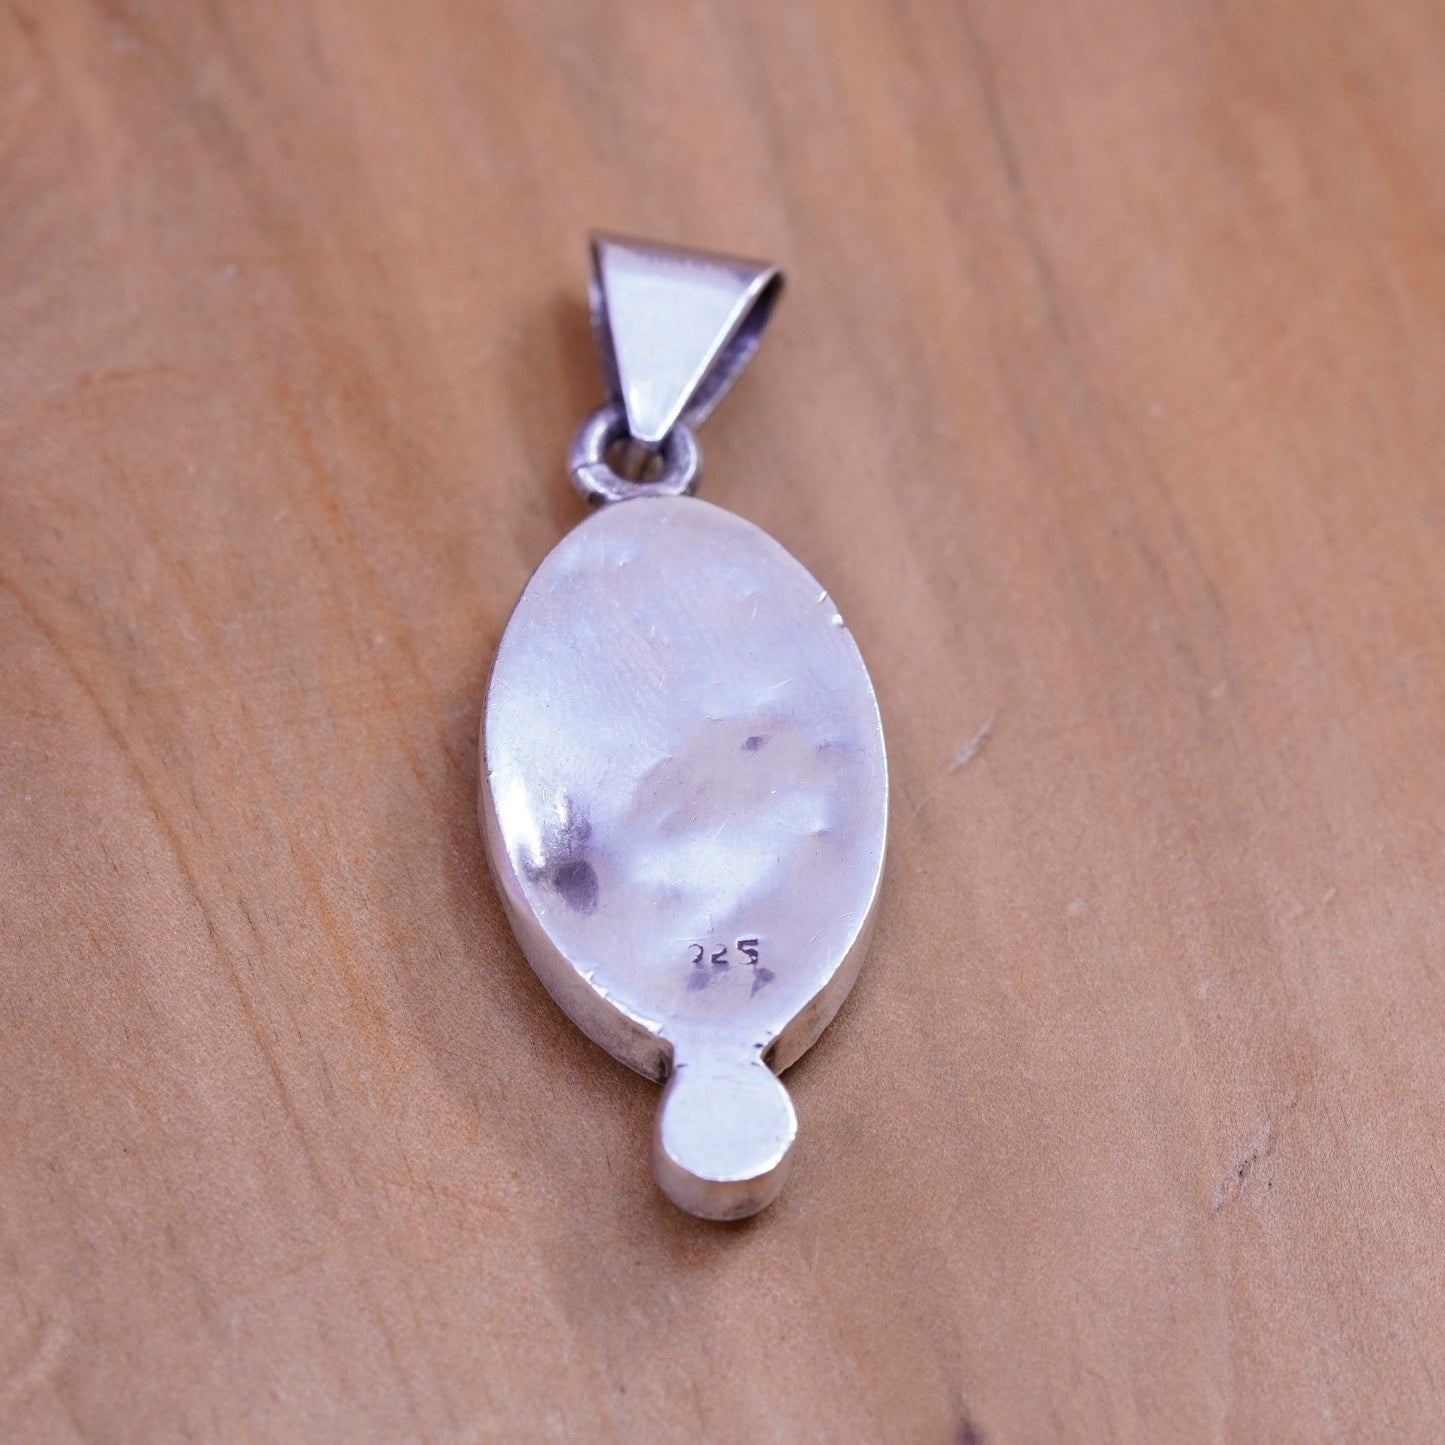 Vintage Mexico Sterling silver handmade pendant, 925 oval charm w/ garnet bead